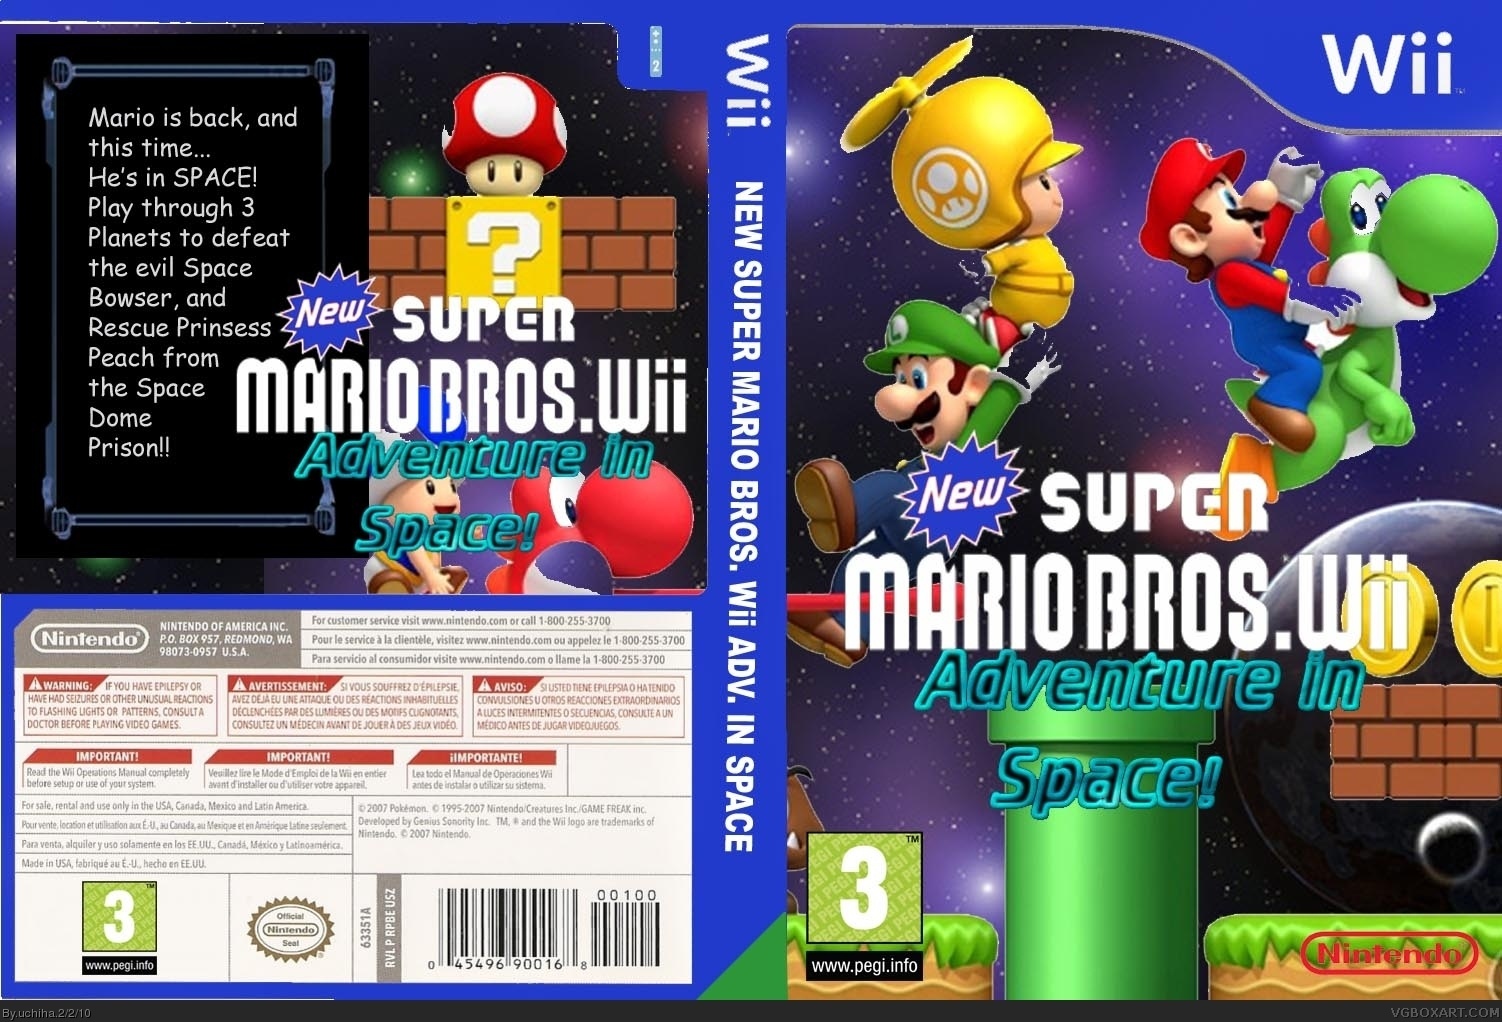 New super mario bros.Wii Adventure in Space box cover